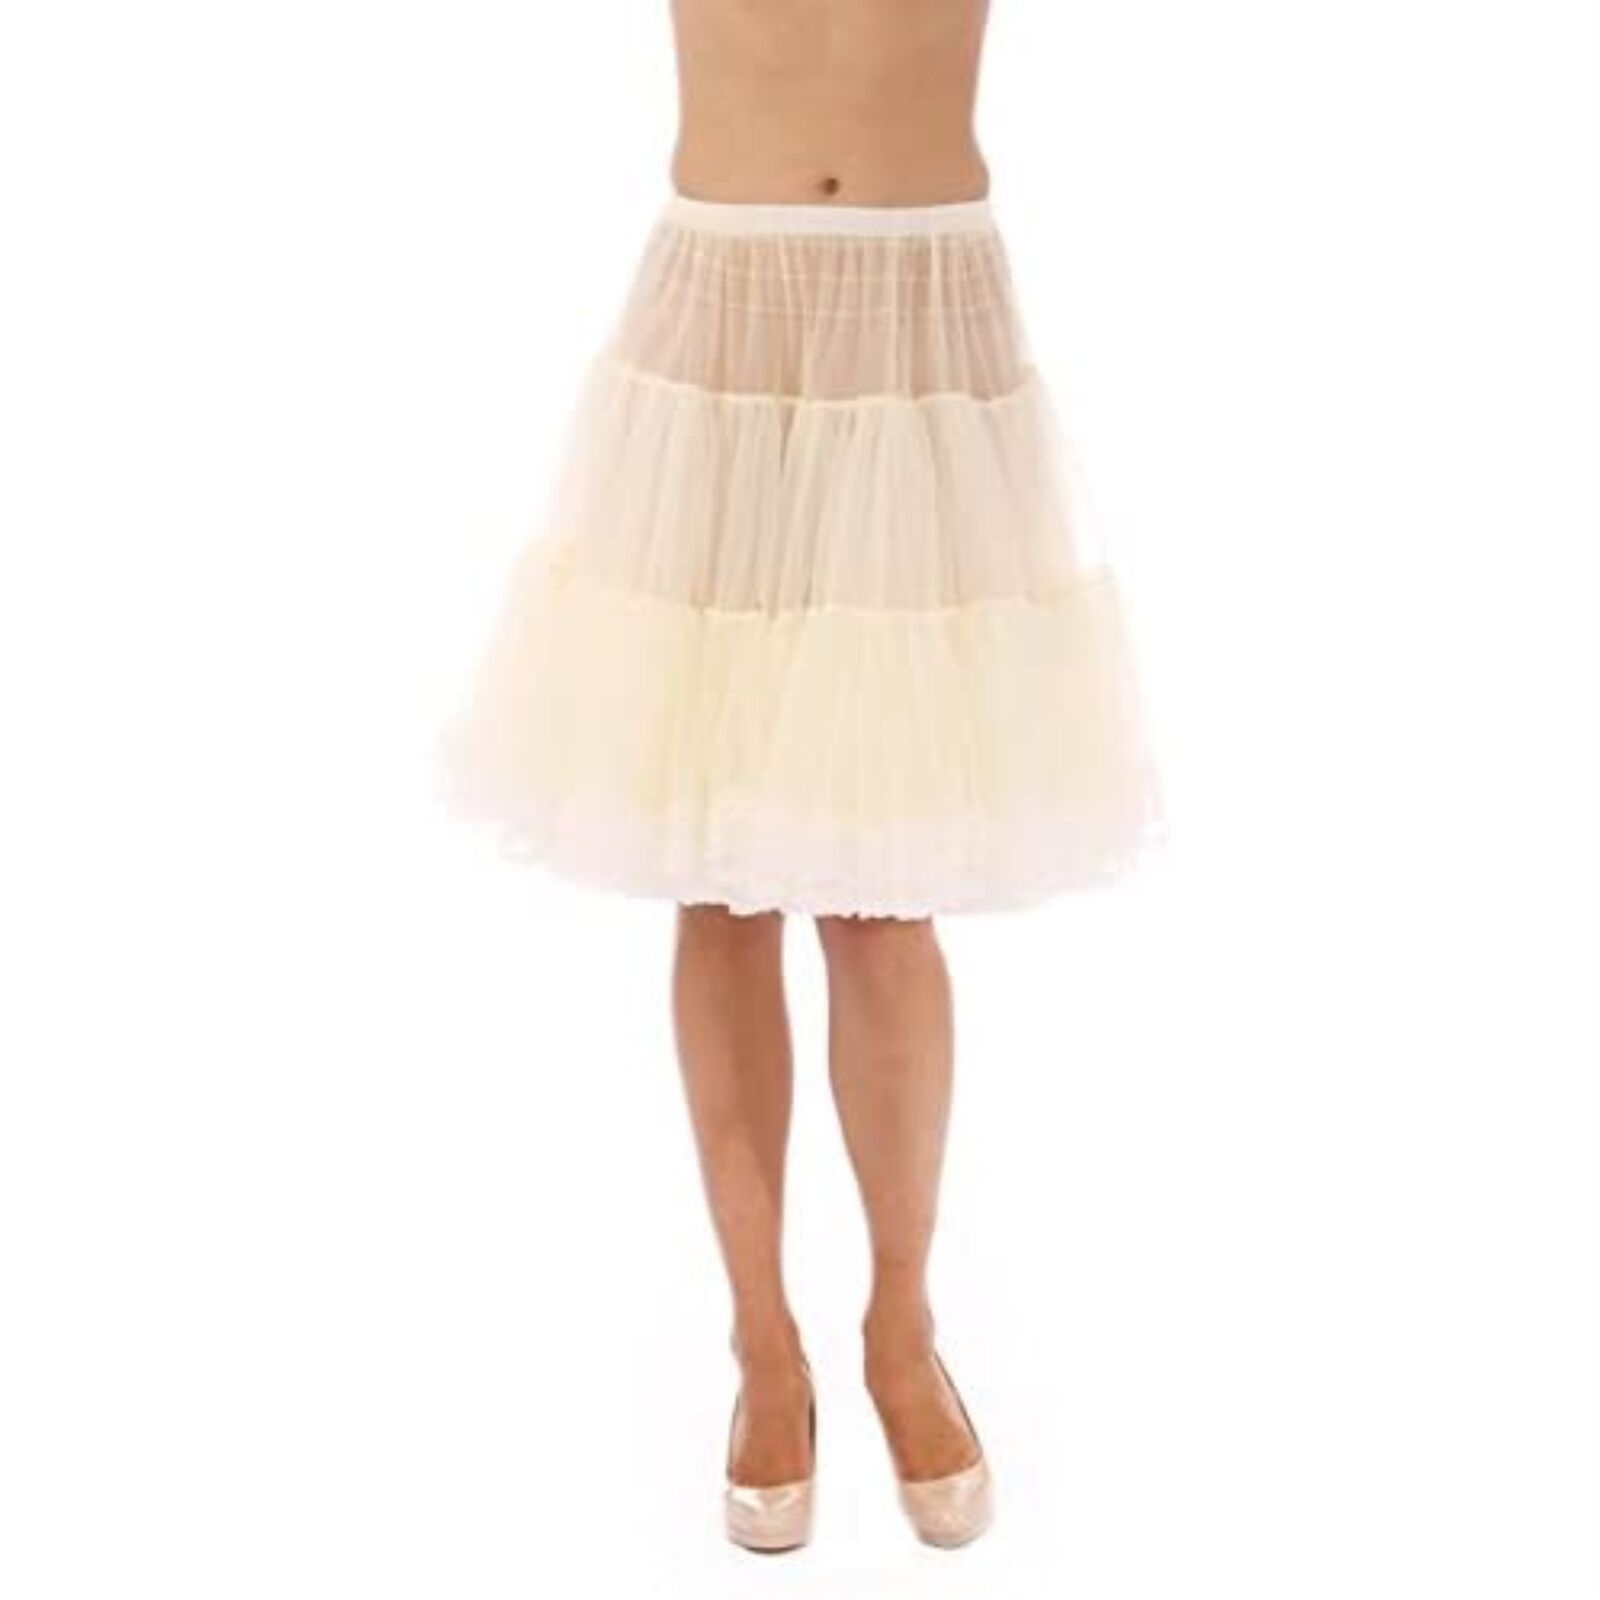 Malco Modes Zooey Luxury Chiffon Child Petticoat Slip, Lace Trim, Adjustable ...